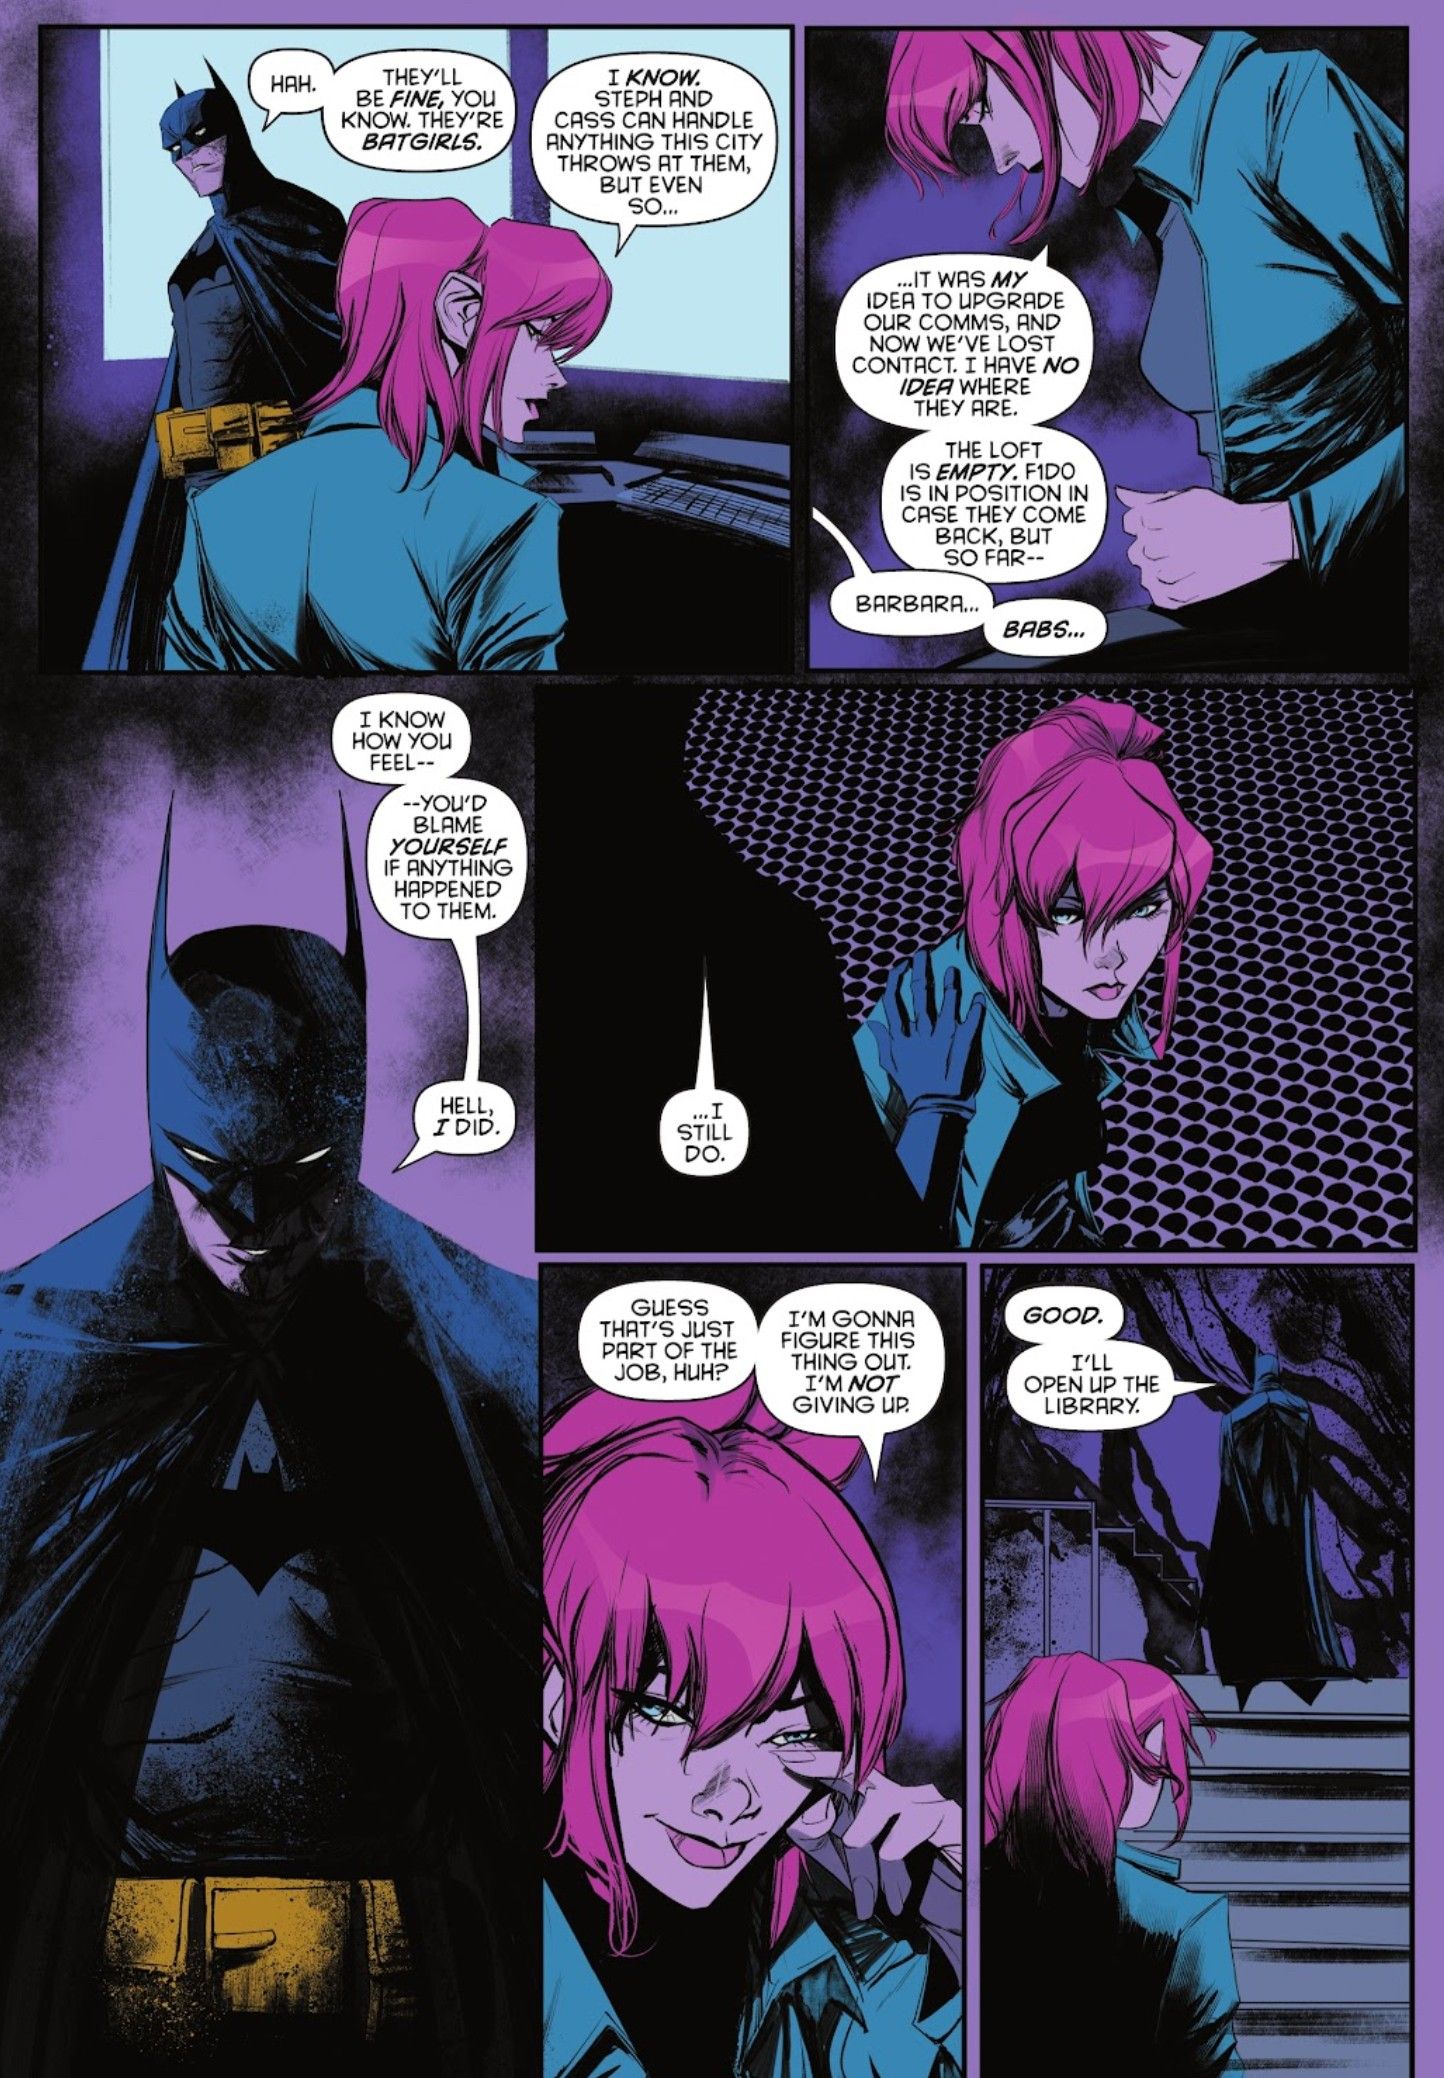 Batman fala com Barbara Gordon sobre o legado da Batgirl